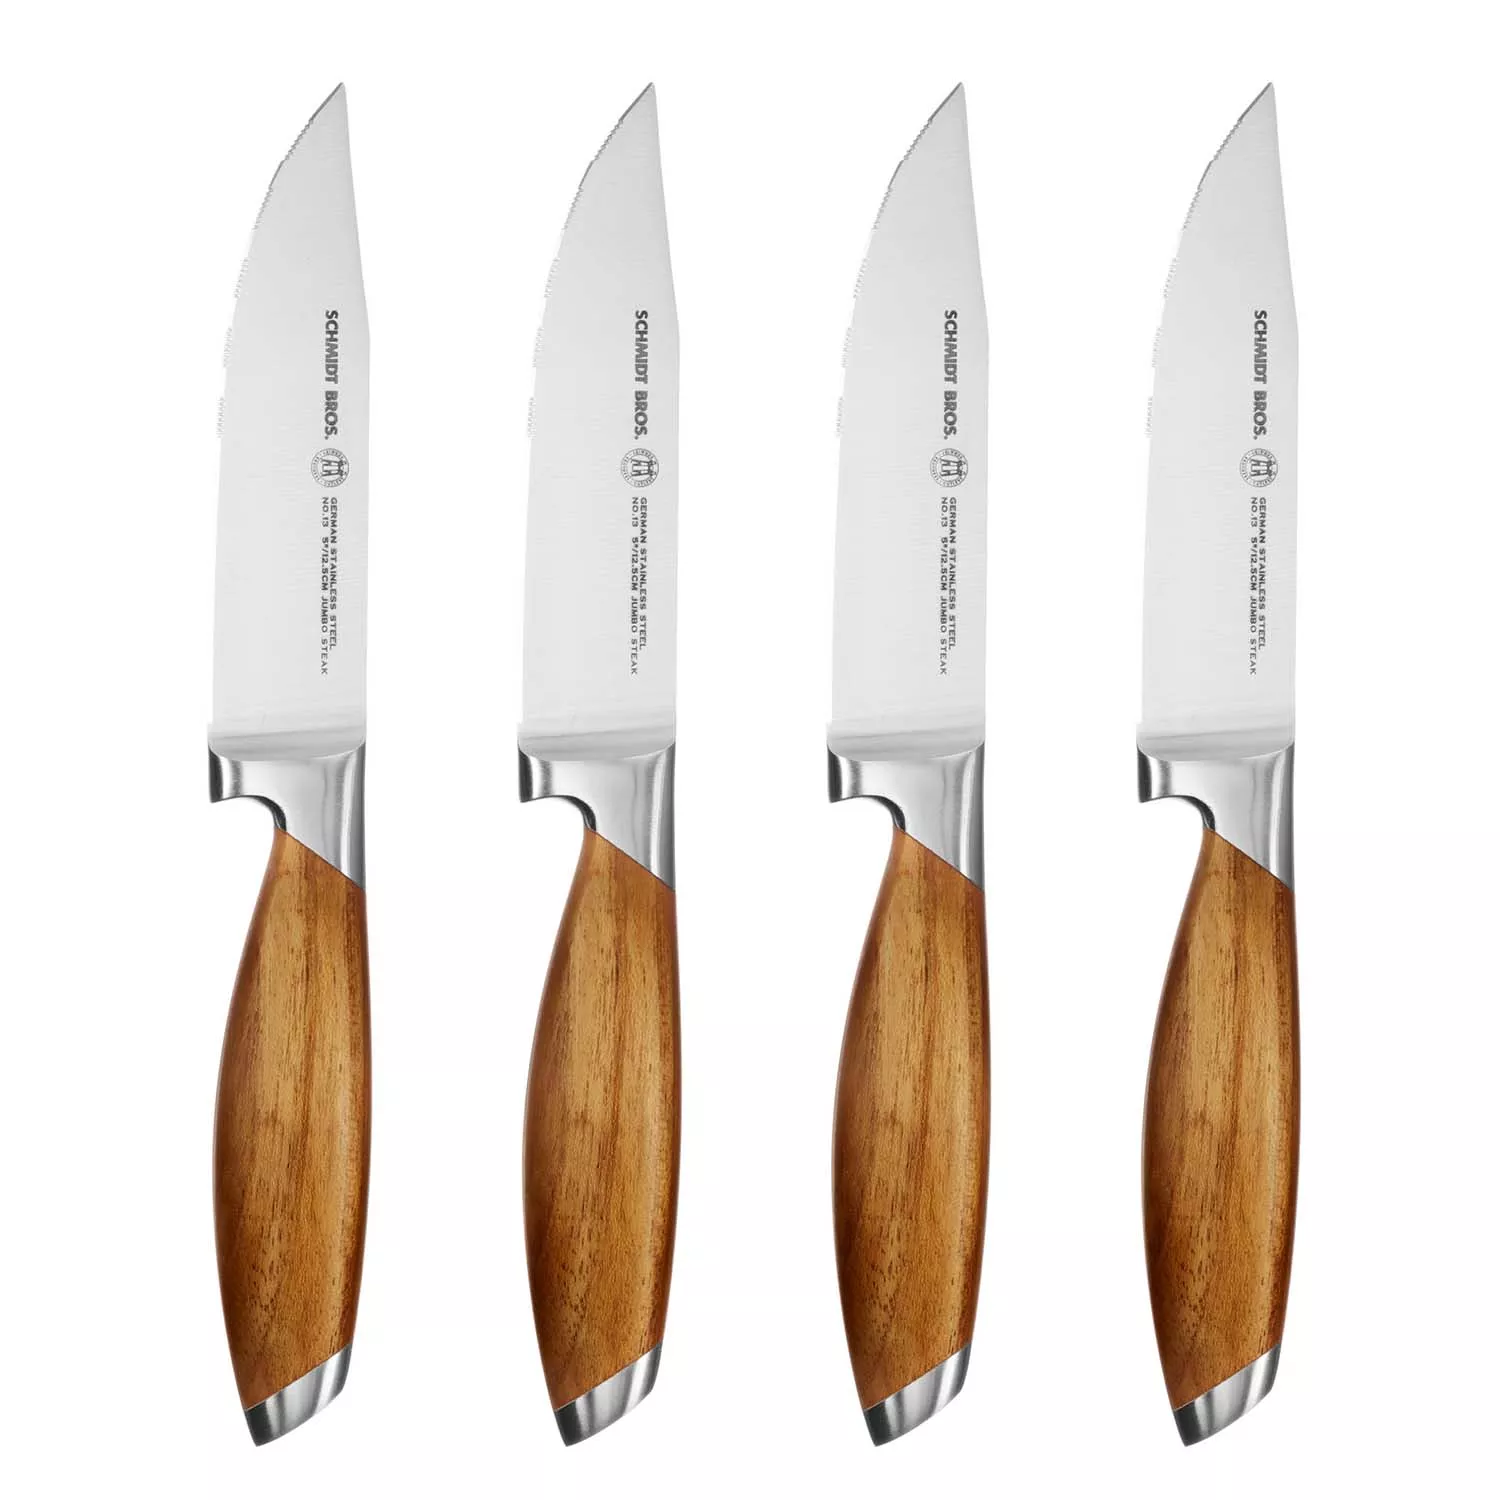 Dura Living Superior Series 8 Piece Stainless Steel Steak Knife Set, Royal  Blue : Target